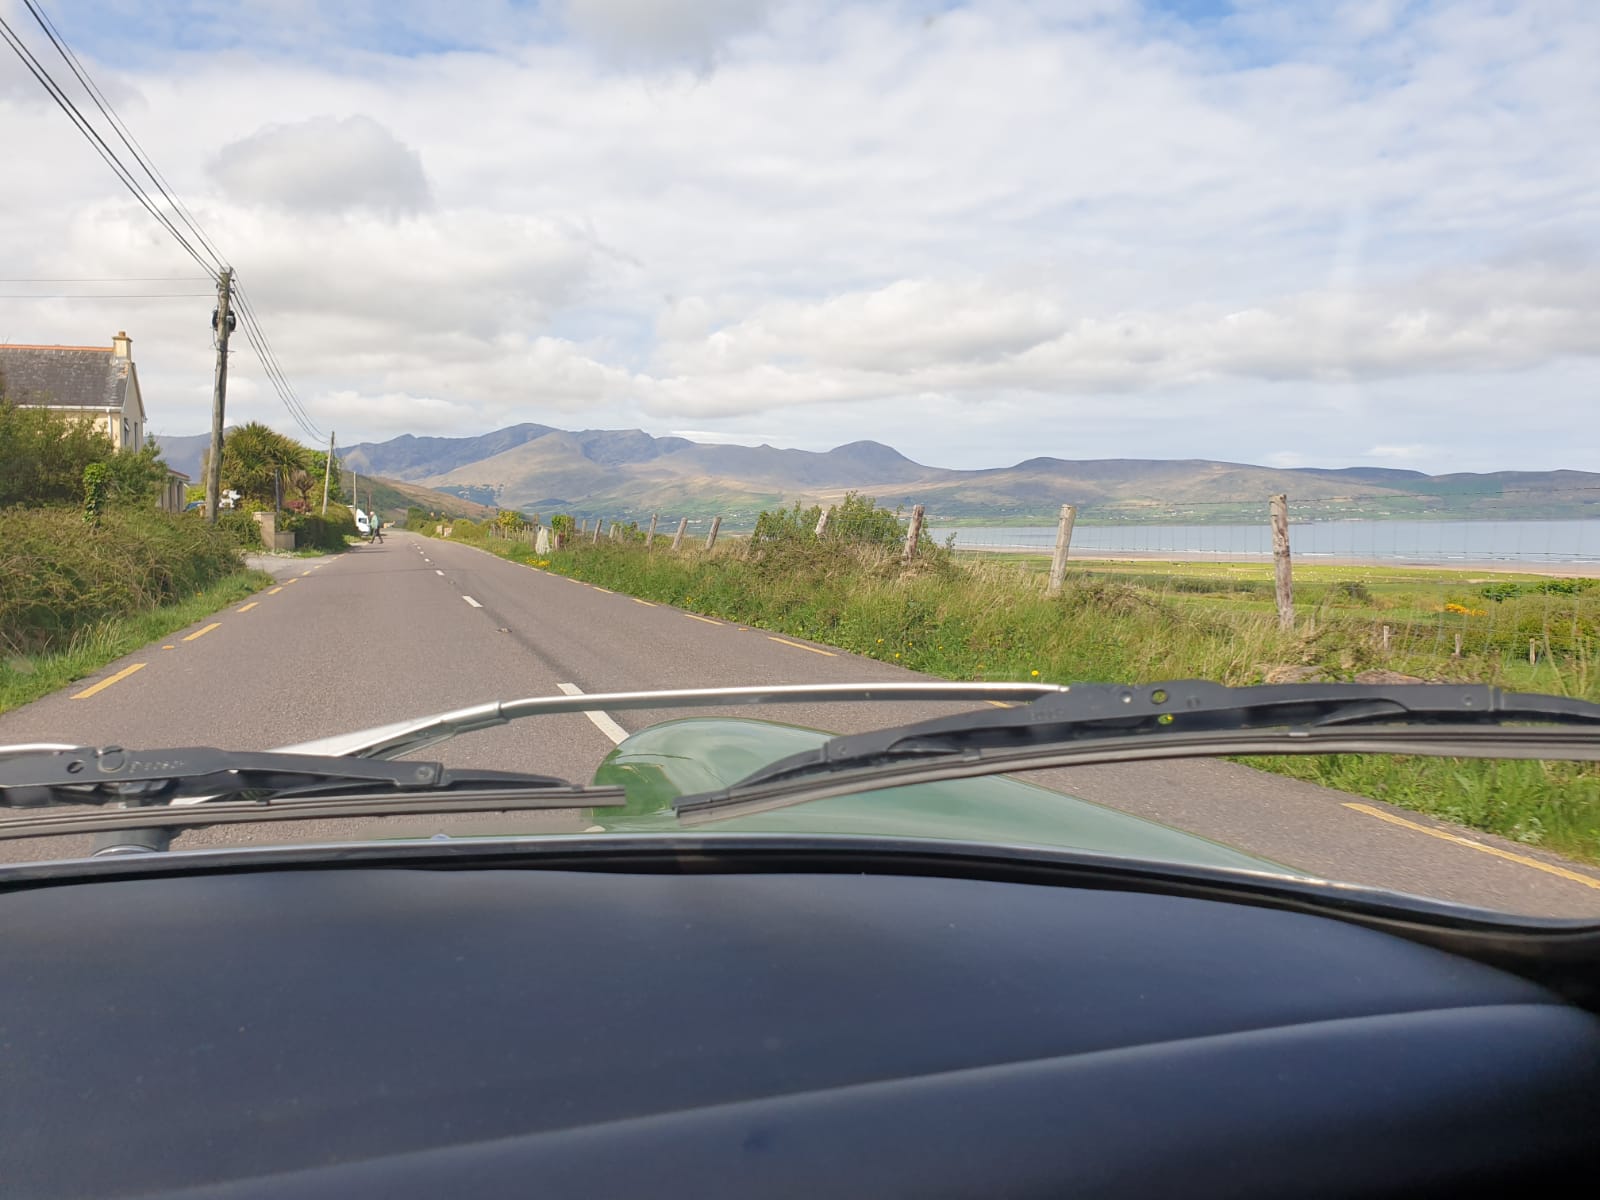 Nigel Allen VW - Along the Irish coast - Cape to cape